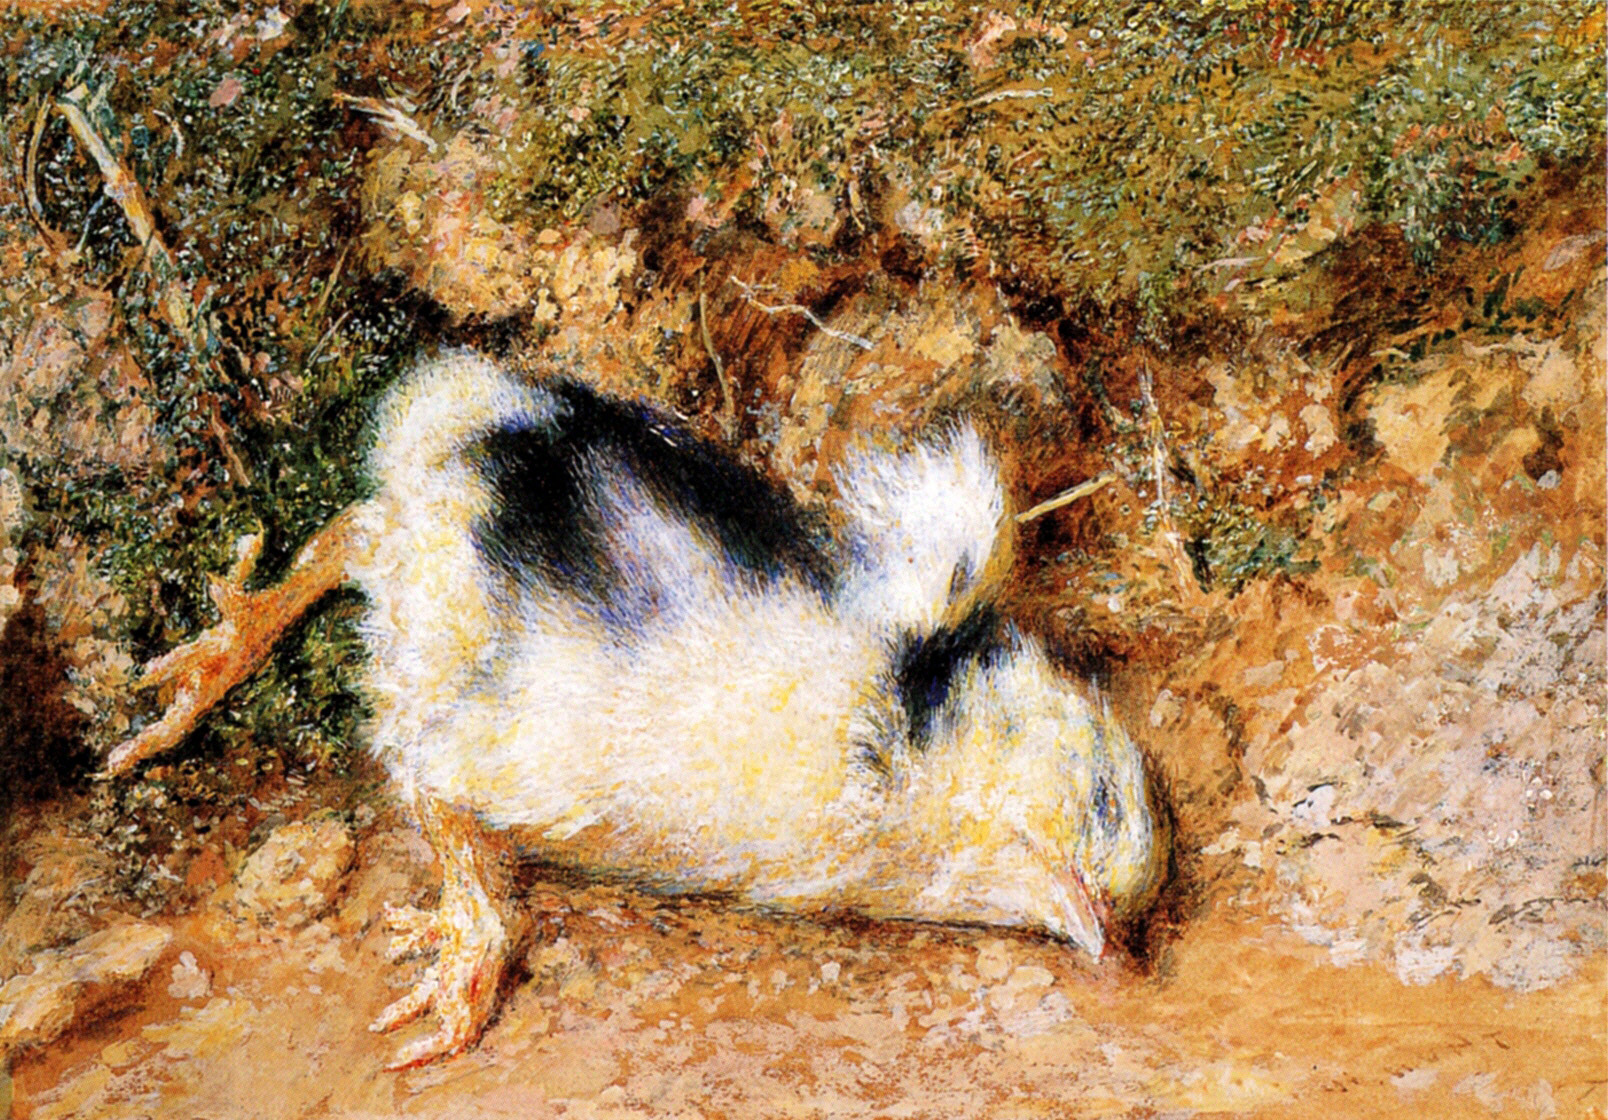 Убитый цыпленок